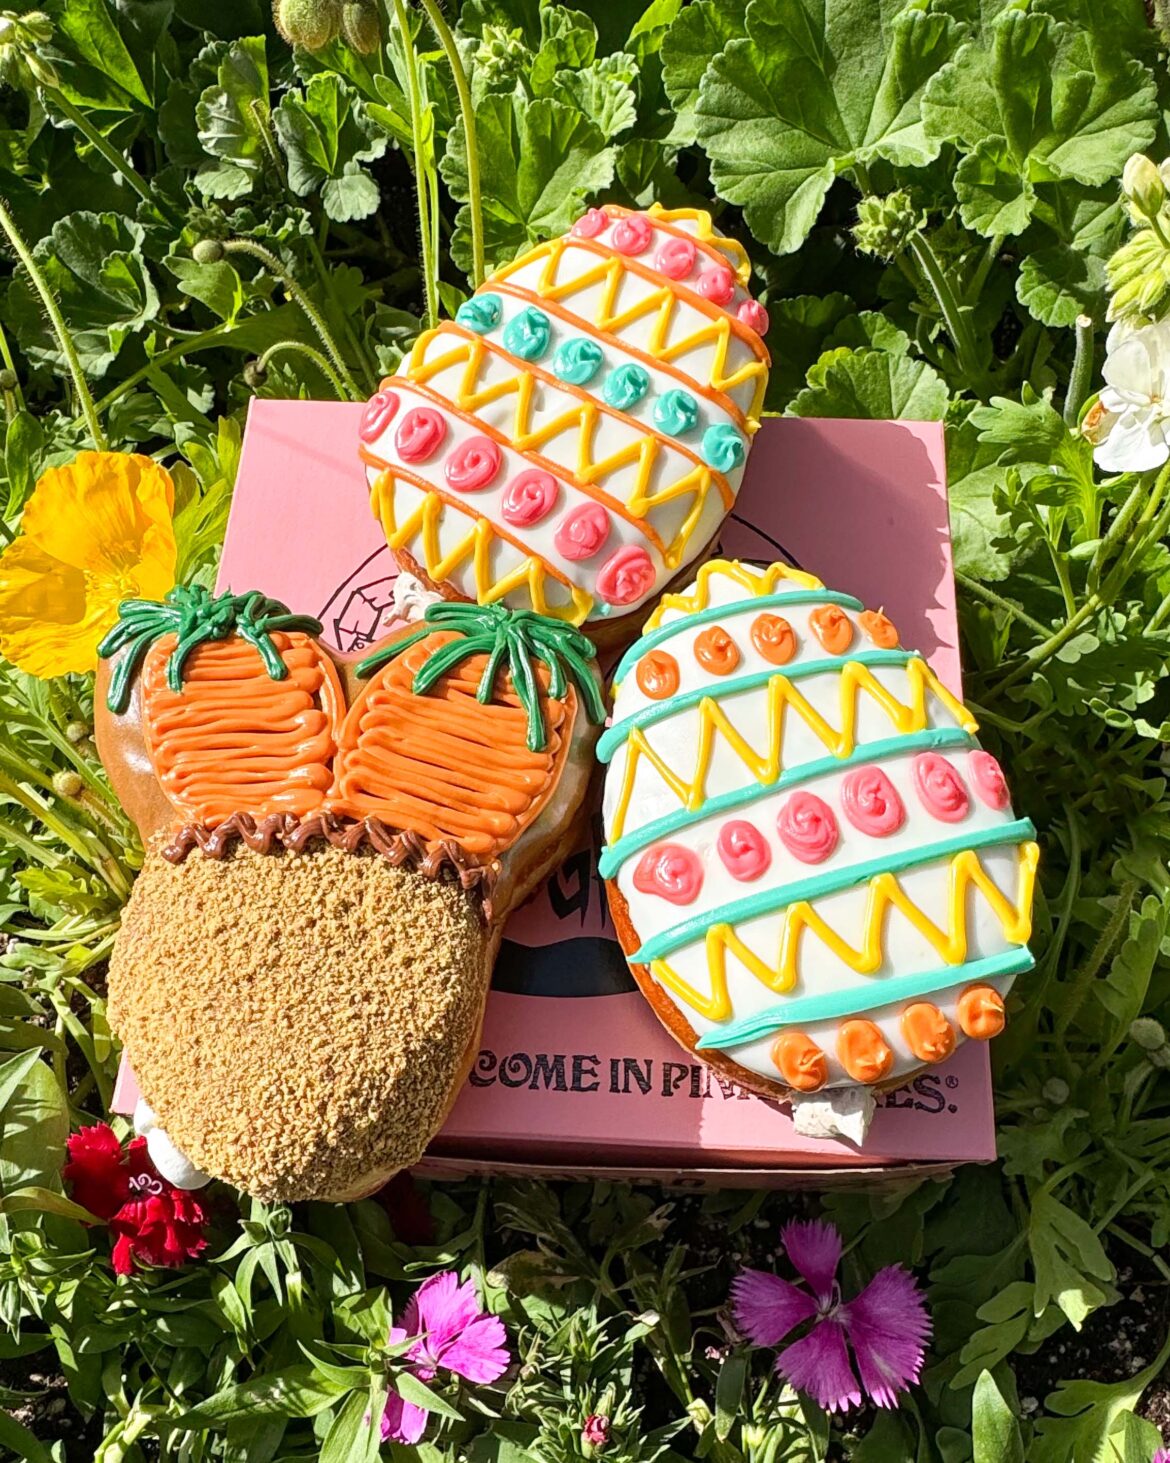 Voodoo Doughnut Celebrates Easter with New Festive Treats